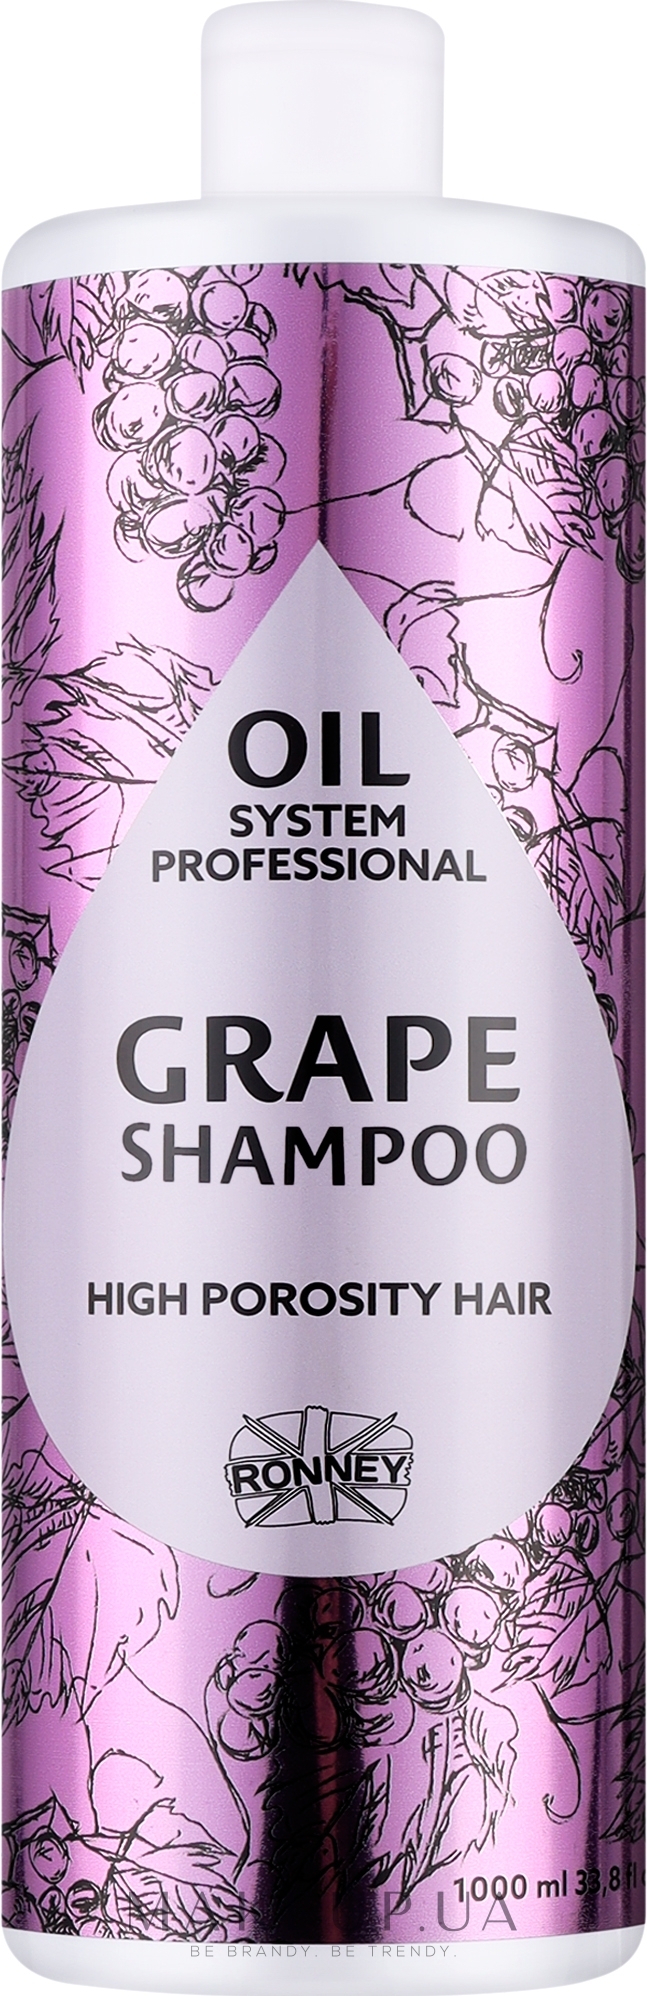 Шампунь для высокопористых волос с маслом винограда - Ronney Professional Oil System High Porosity Hair Grape Shampoo — фото 1000ml